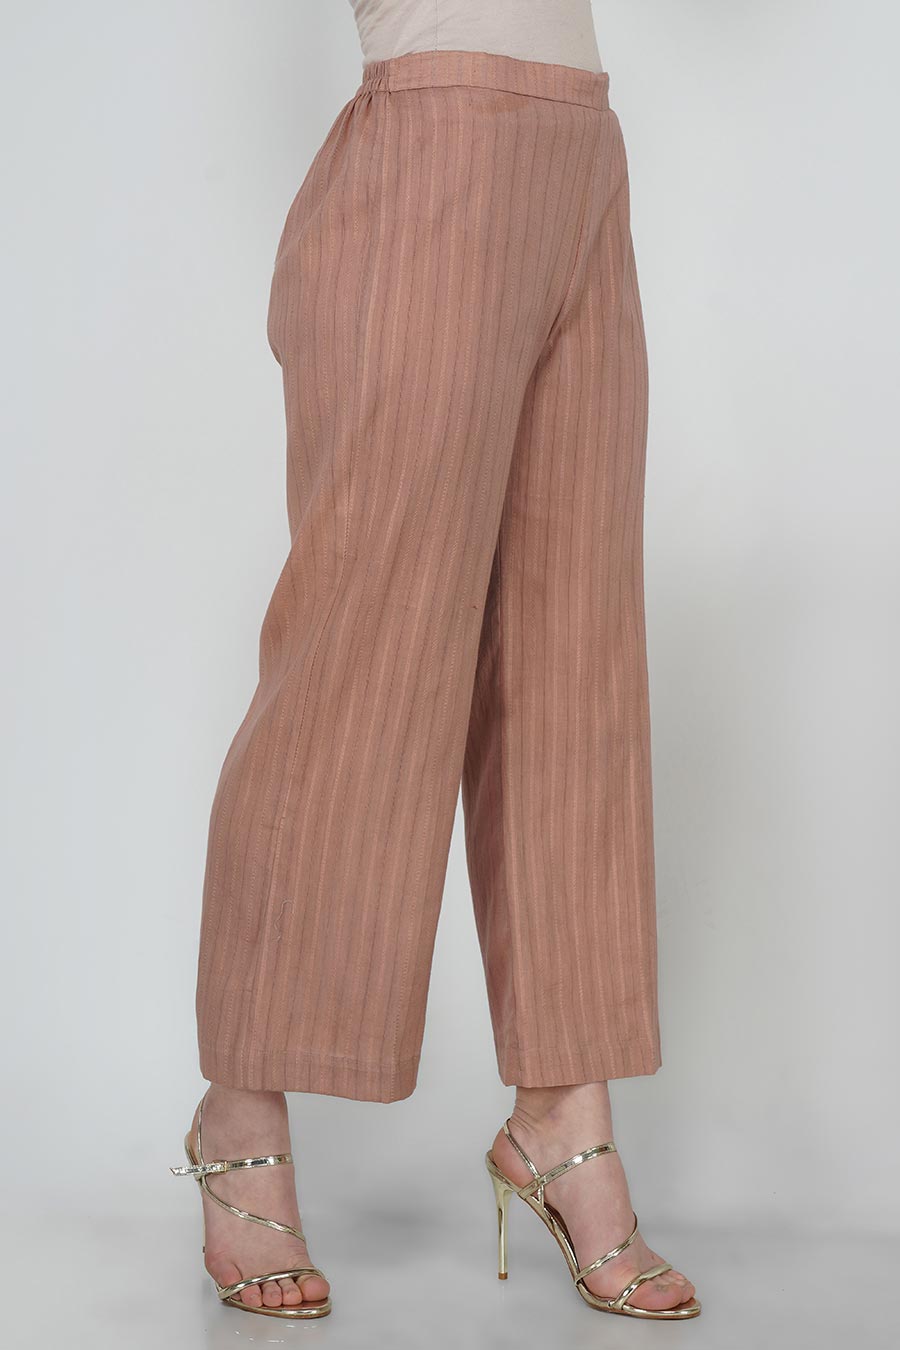 Sepia Leno Cotton Striped Pants